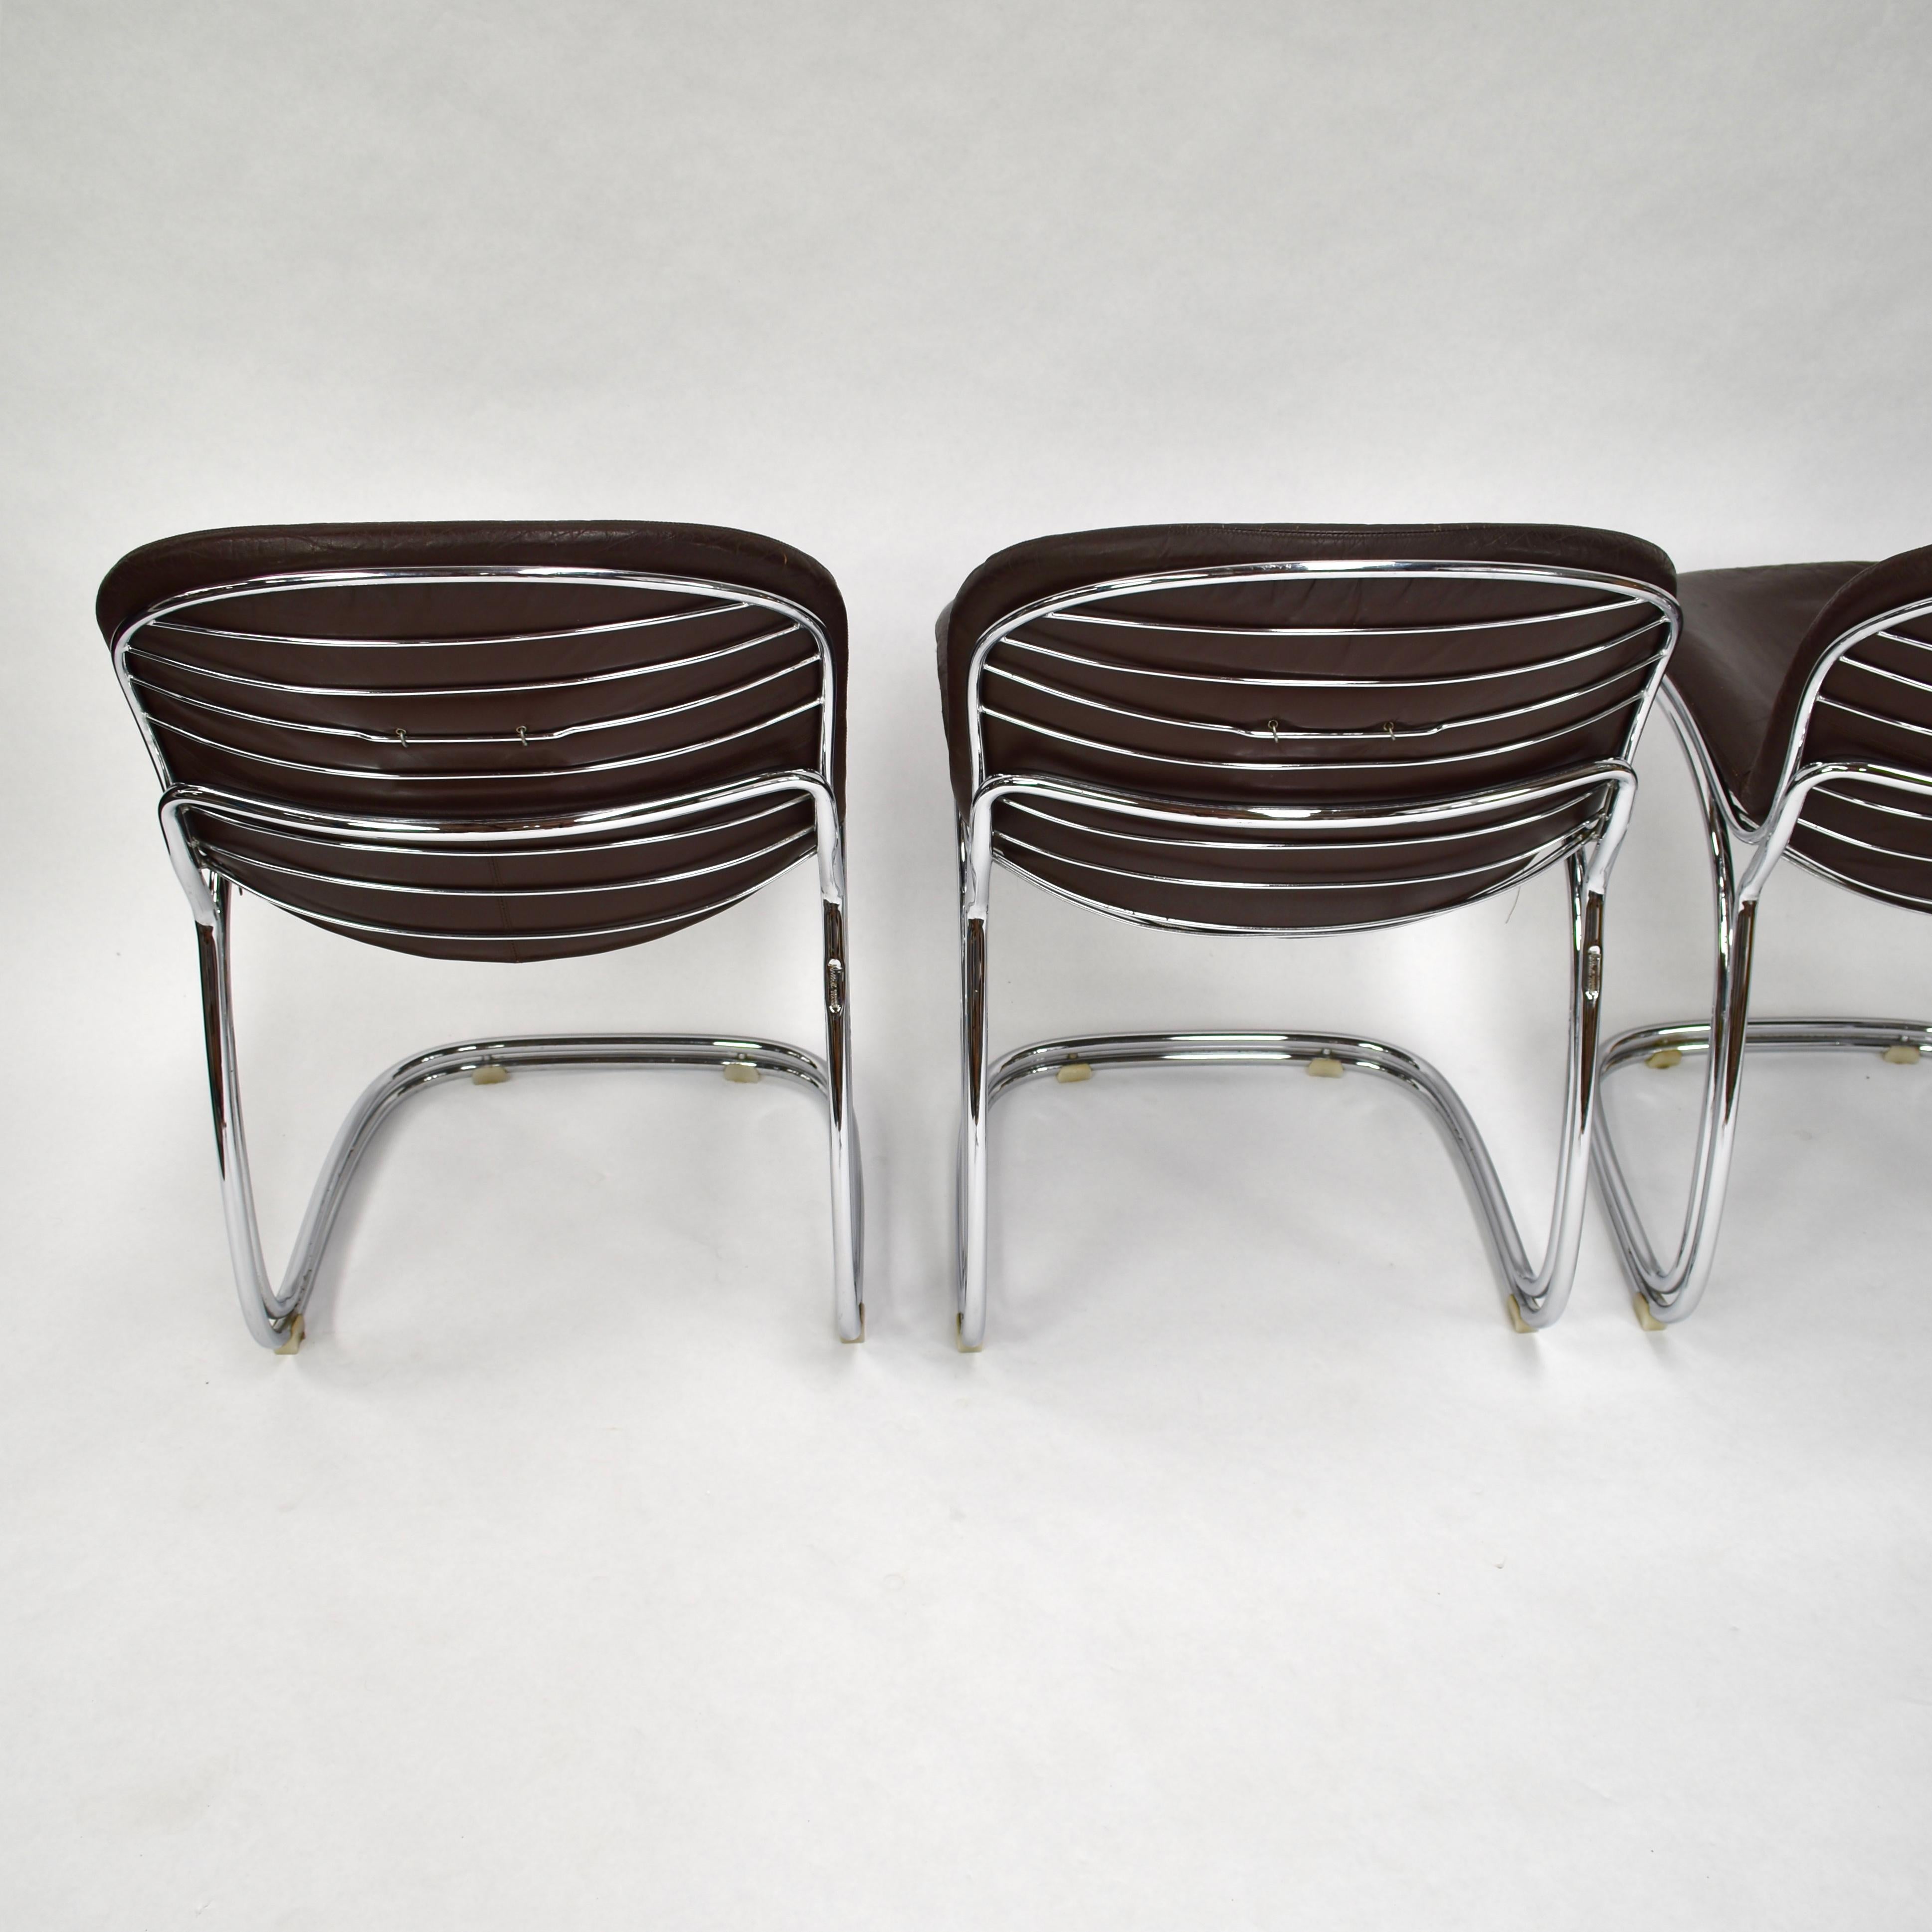 Late 20th Century Gastone Rinaldi 'Sabrina' Chocolate Brown Leather Chairs for RIMA, Italy